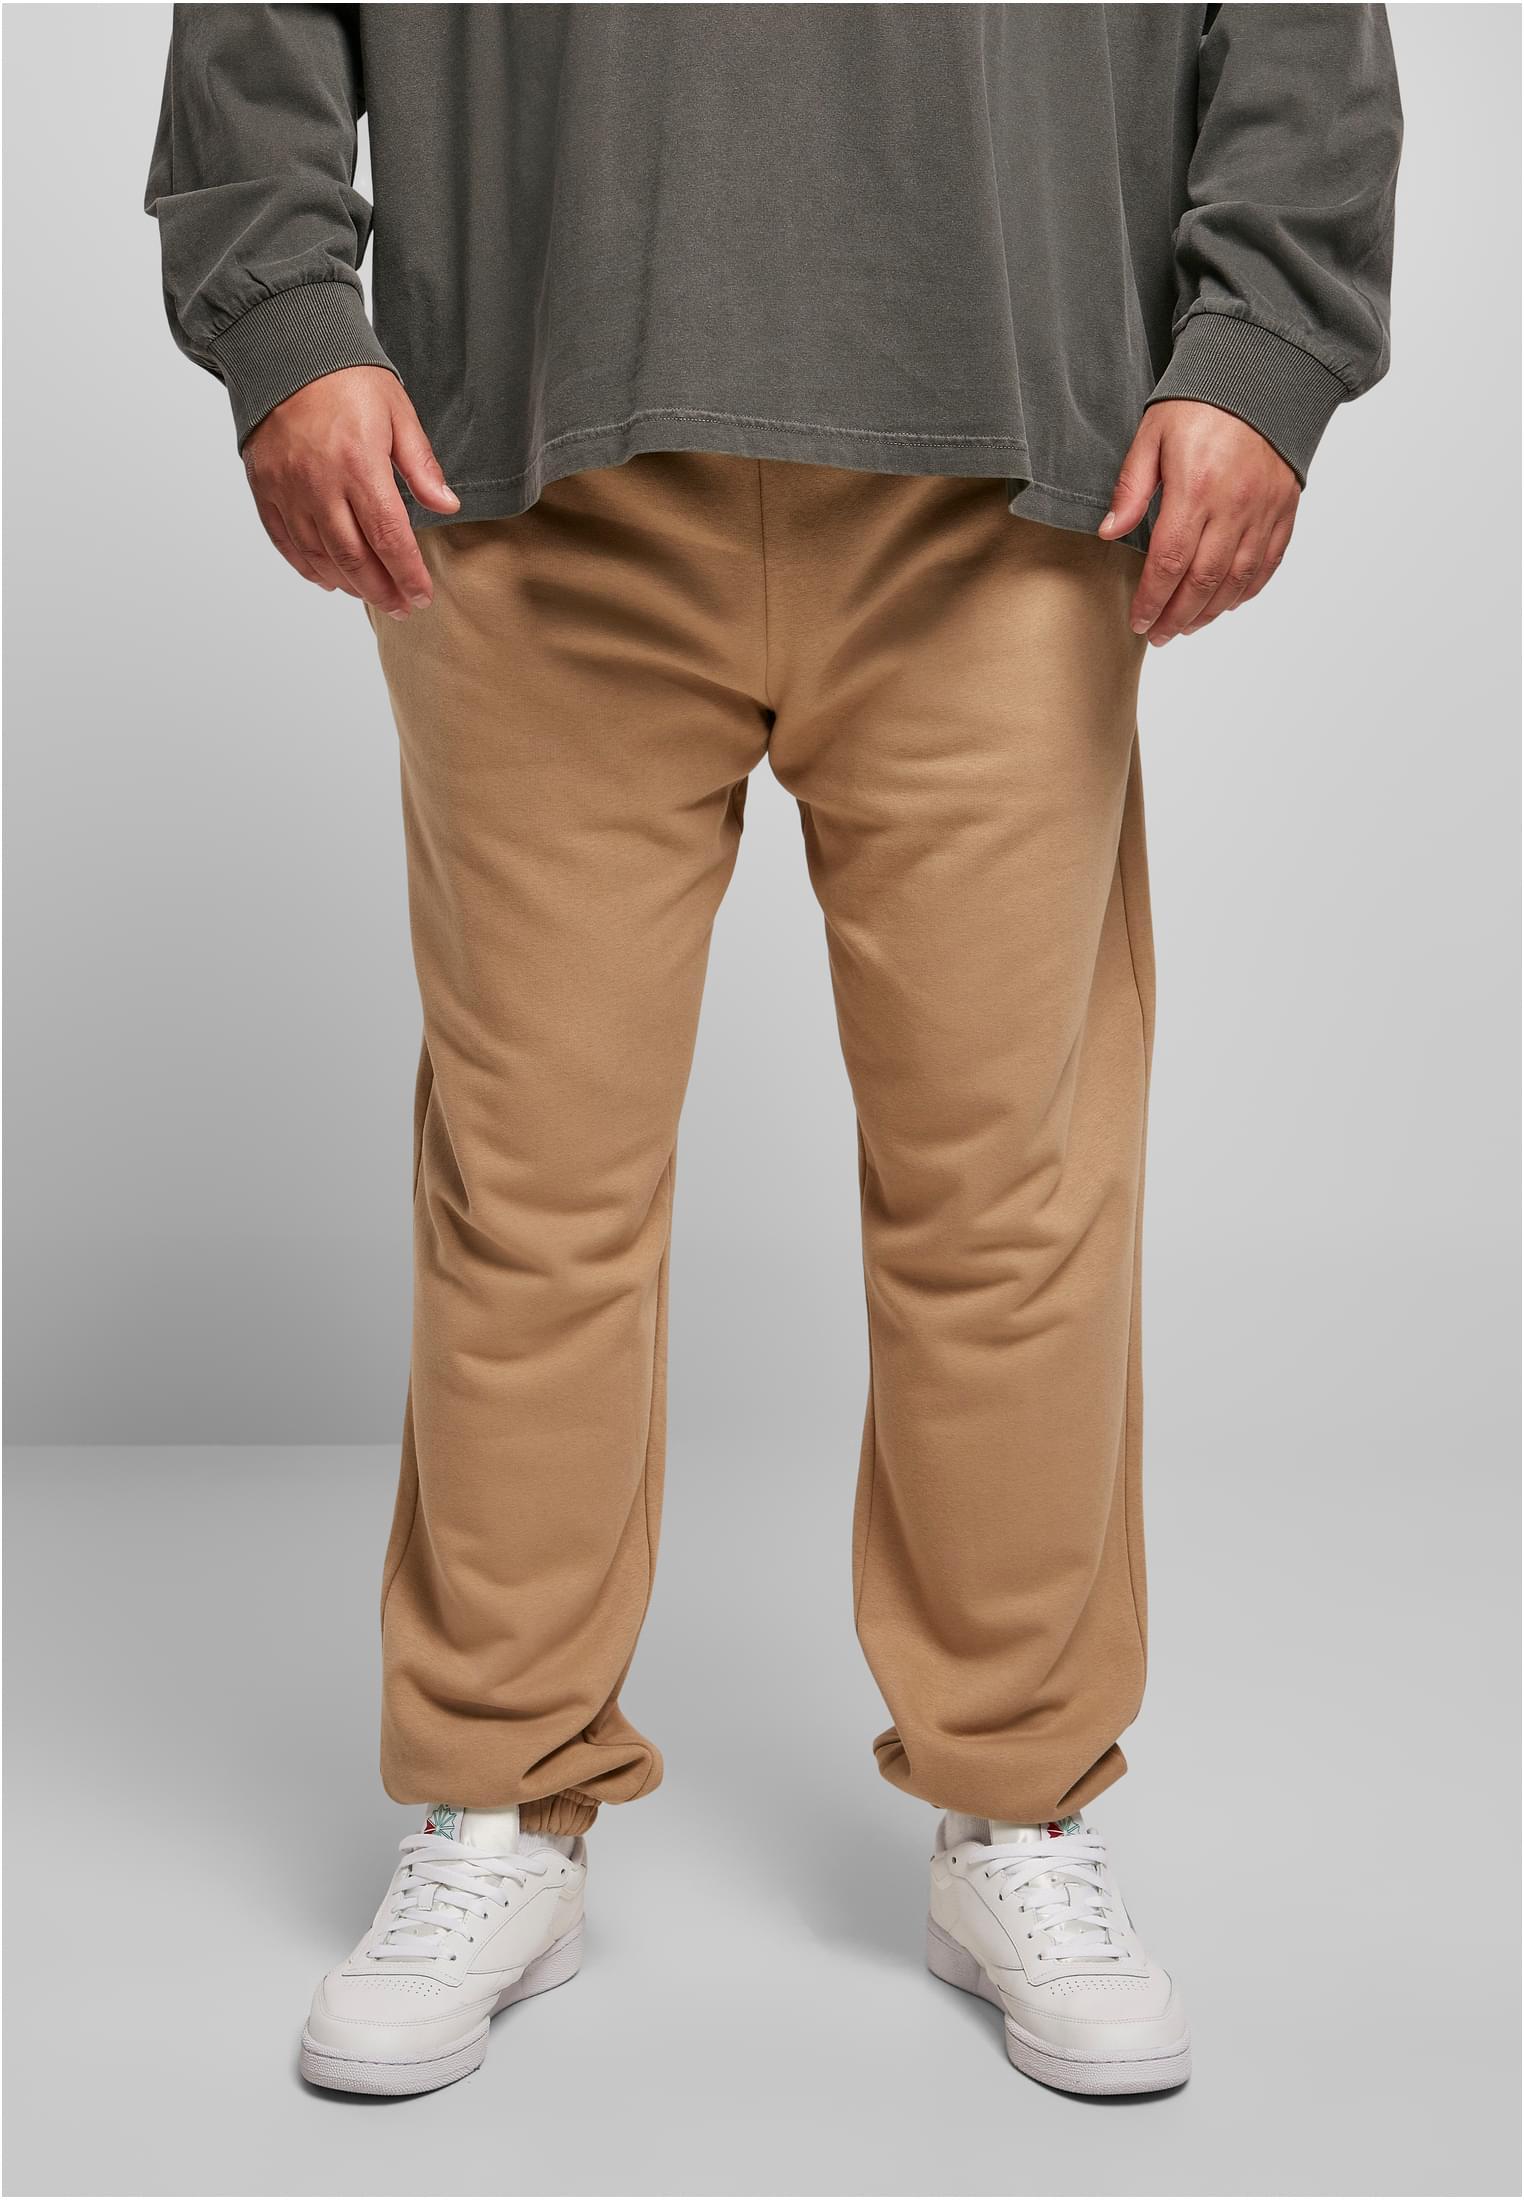 Urban Classics Plus Size Basic Sweatpants 2.0 (Farbe: warm sand / Größe: 3XL)